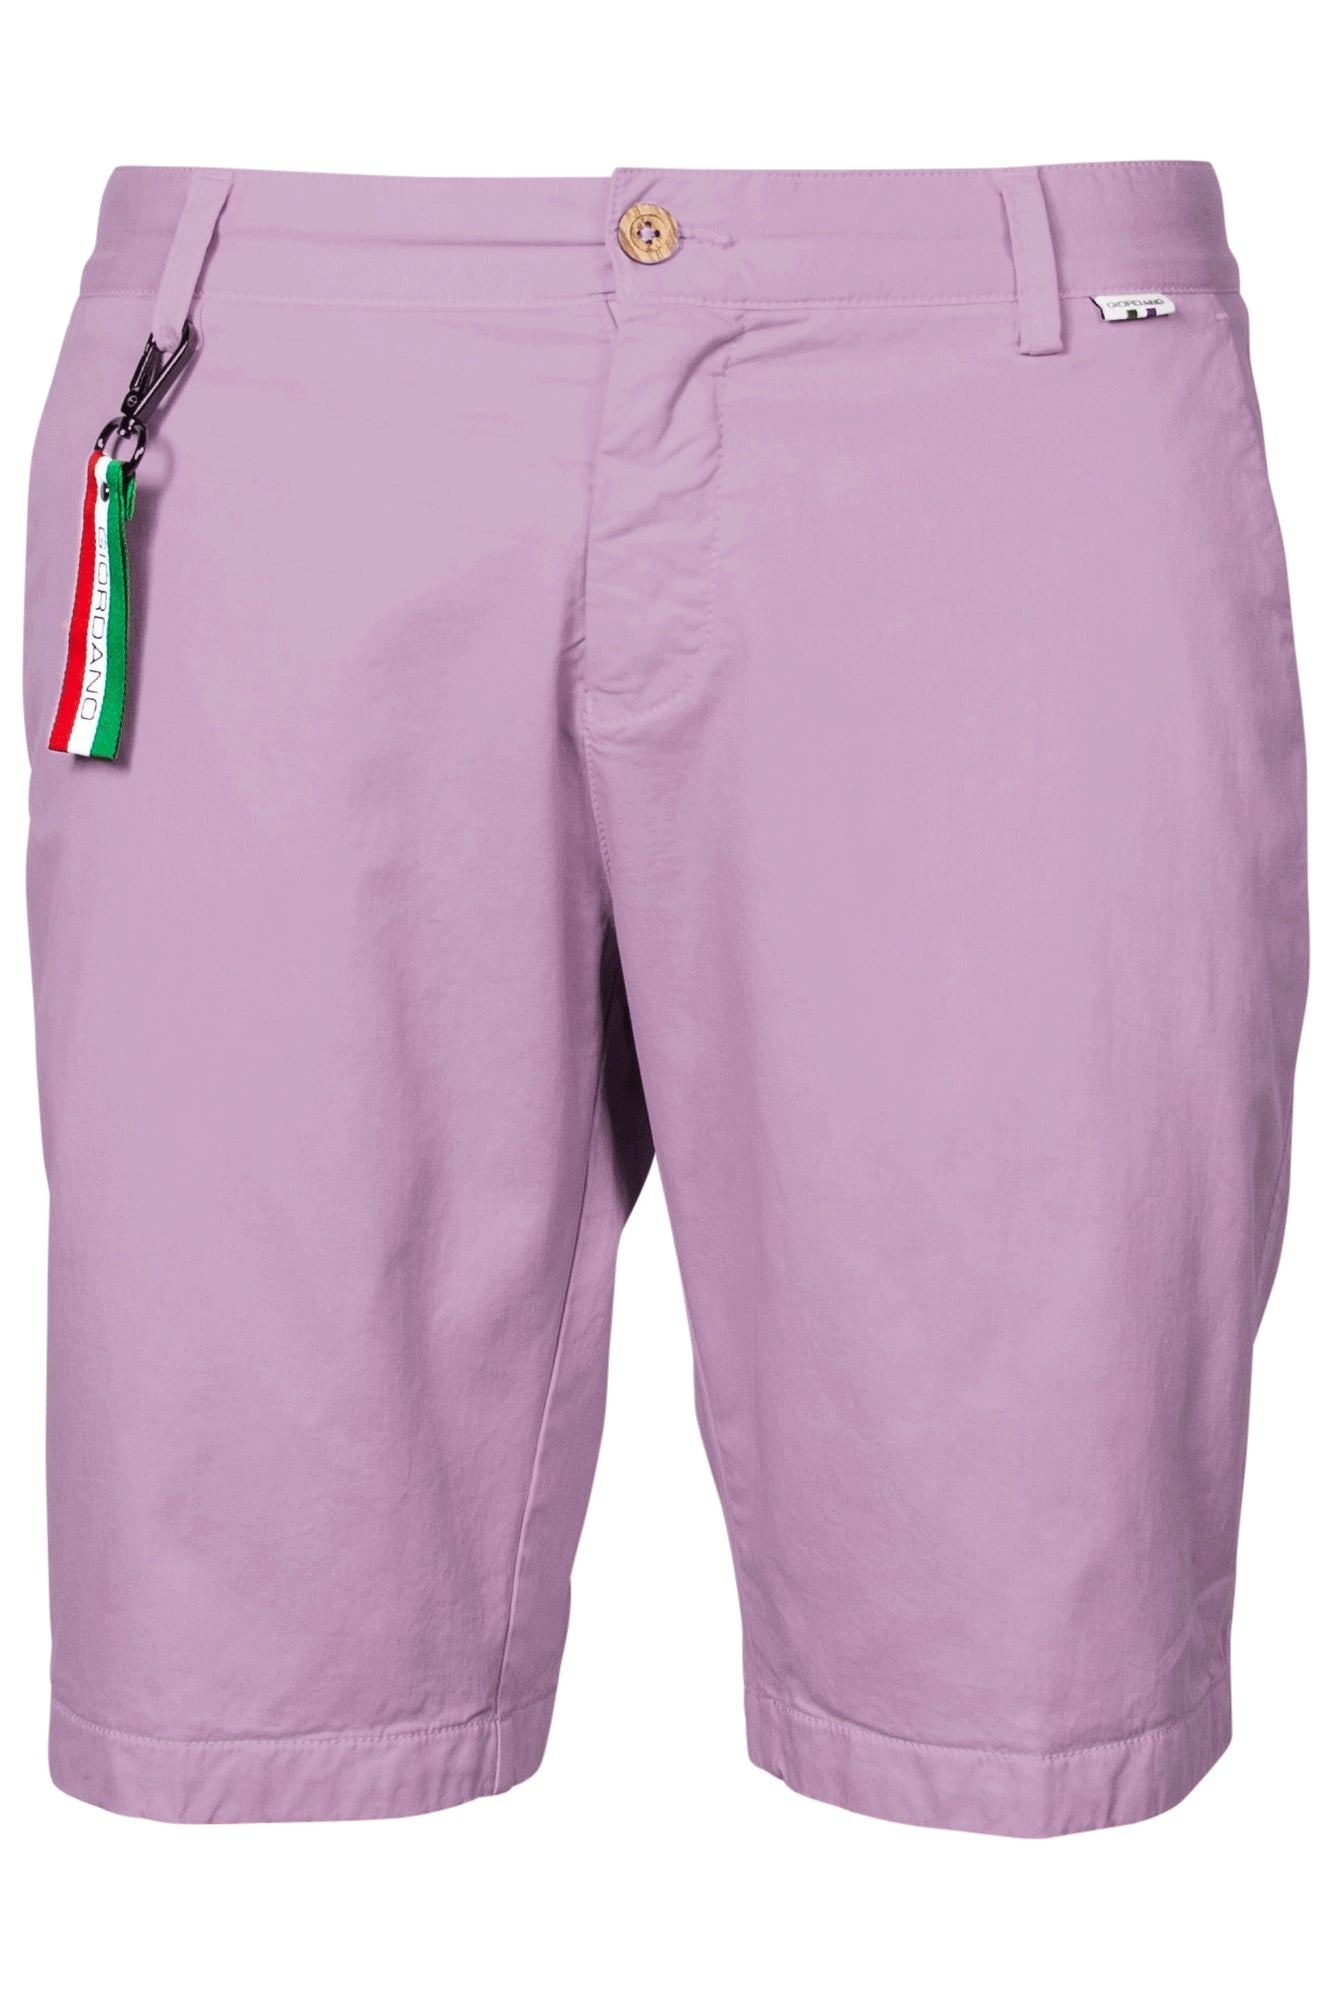 Giordano Lilac Bermuda Shorts